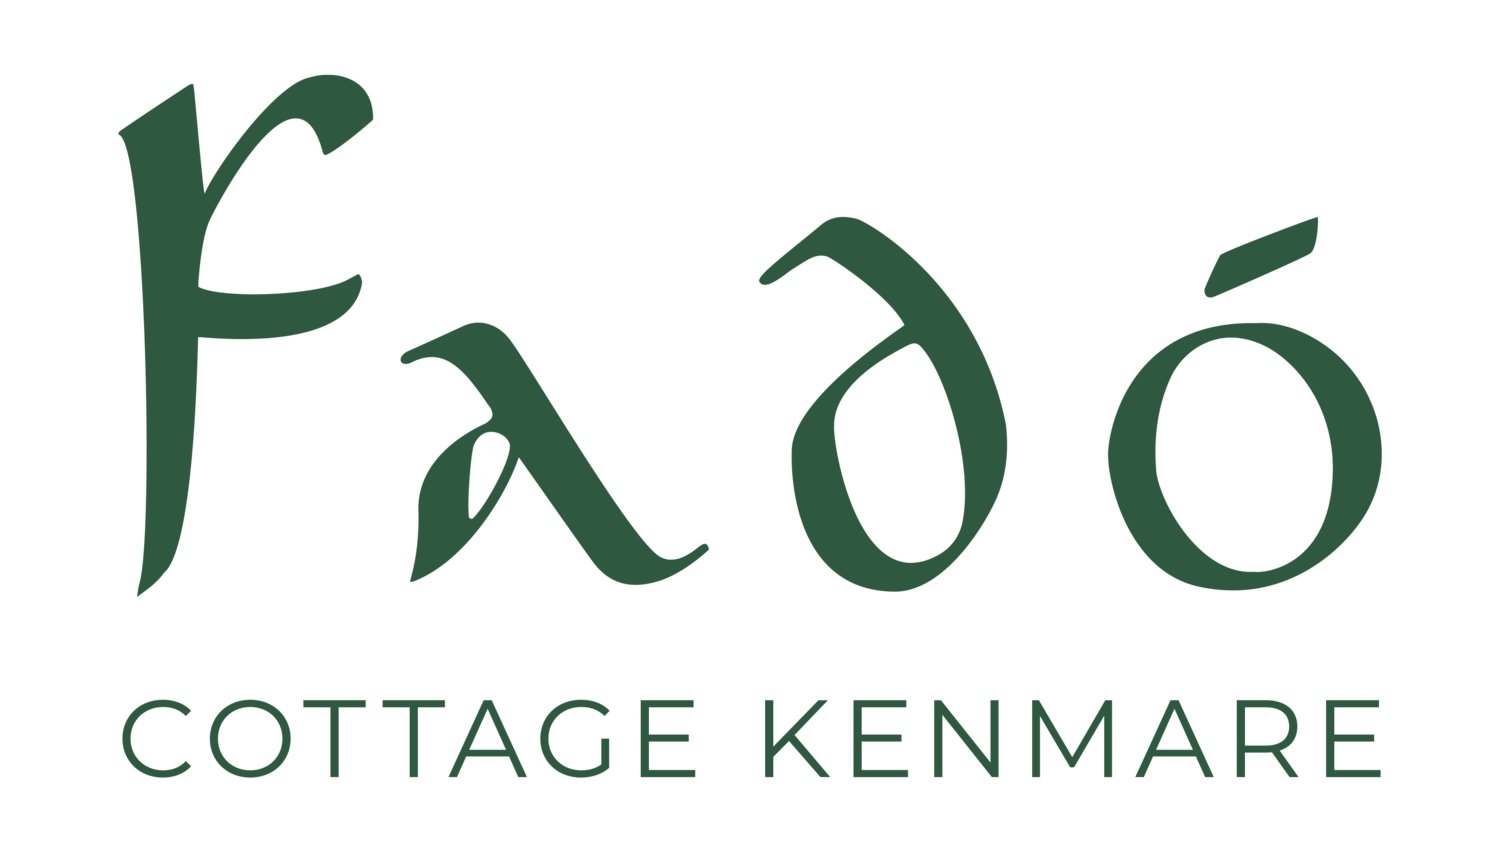 Fadó Cottage Kenmare